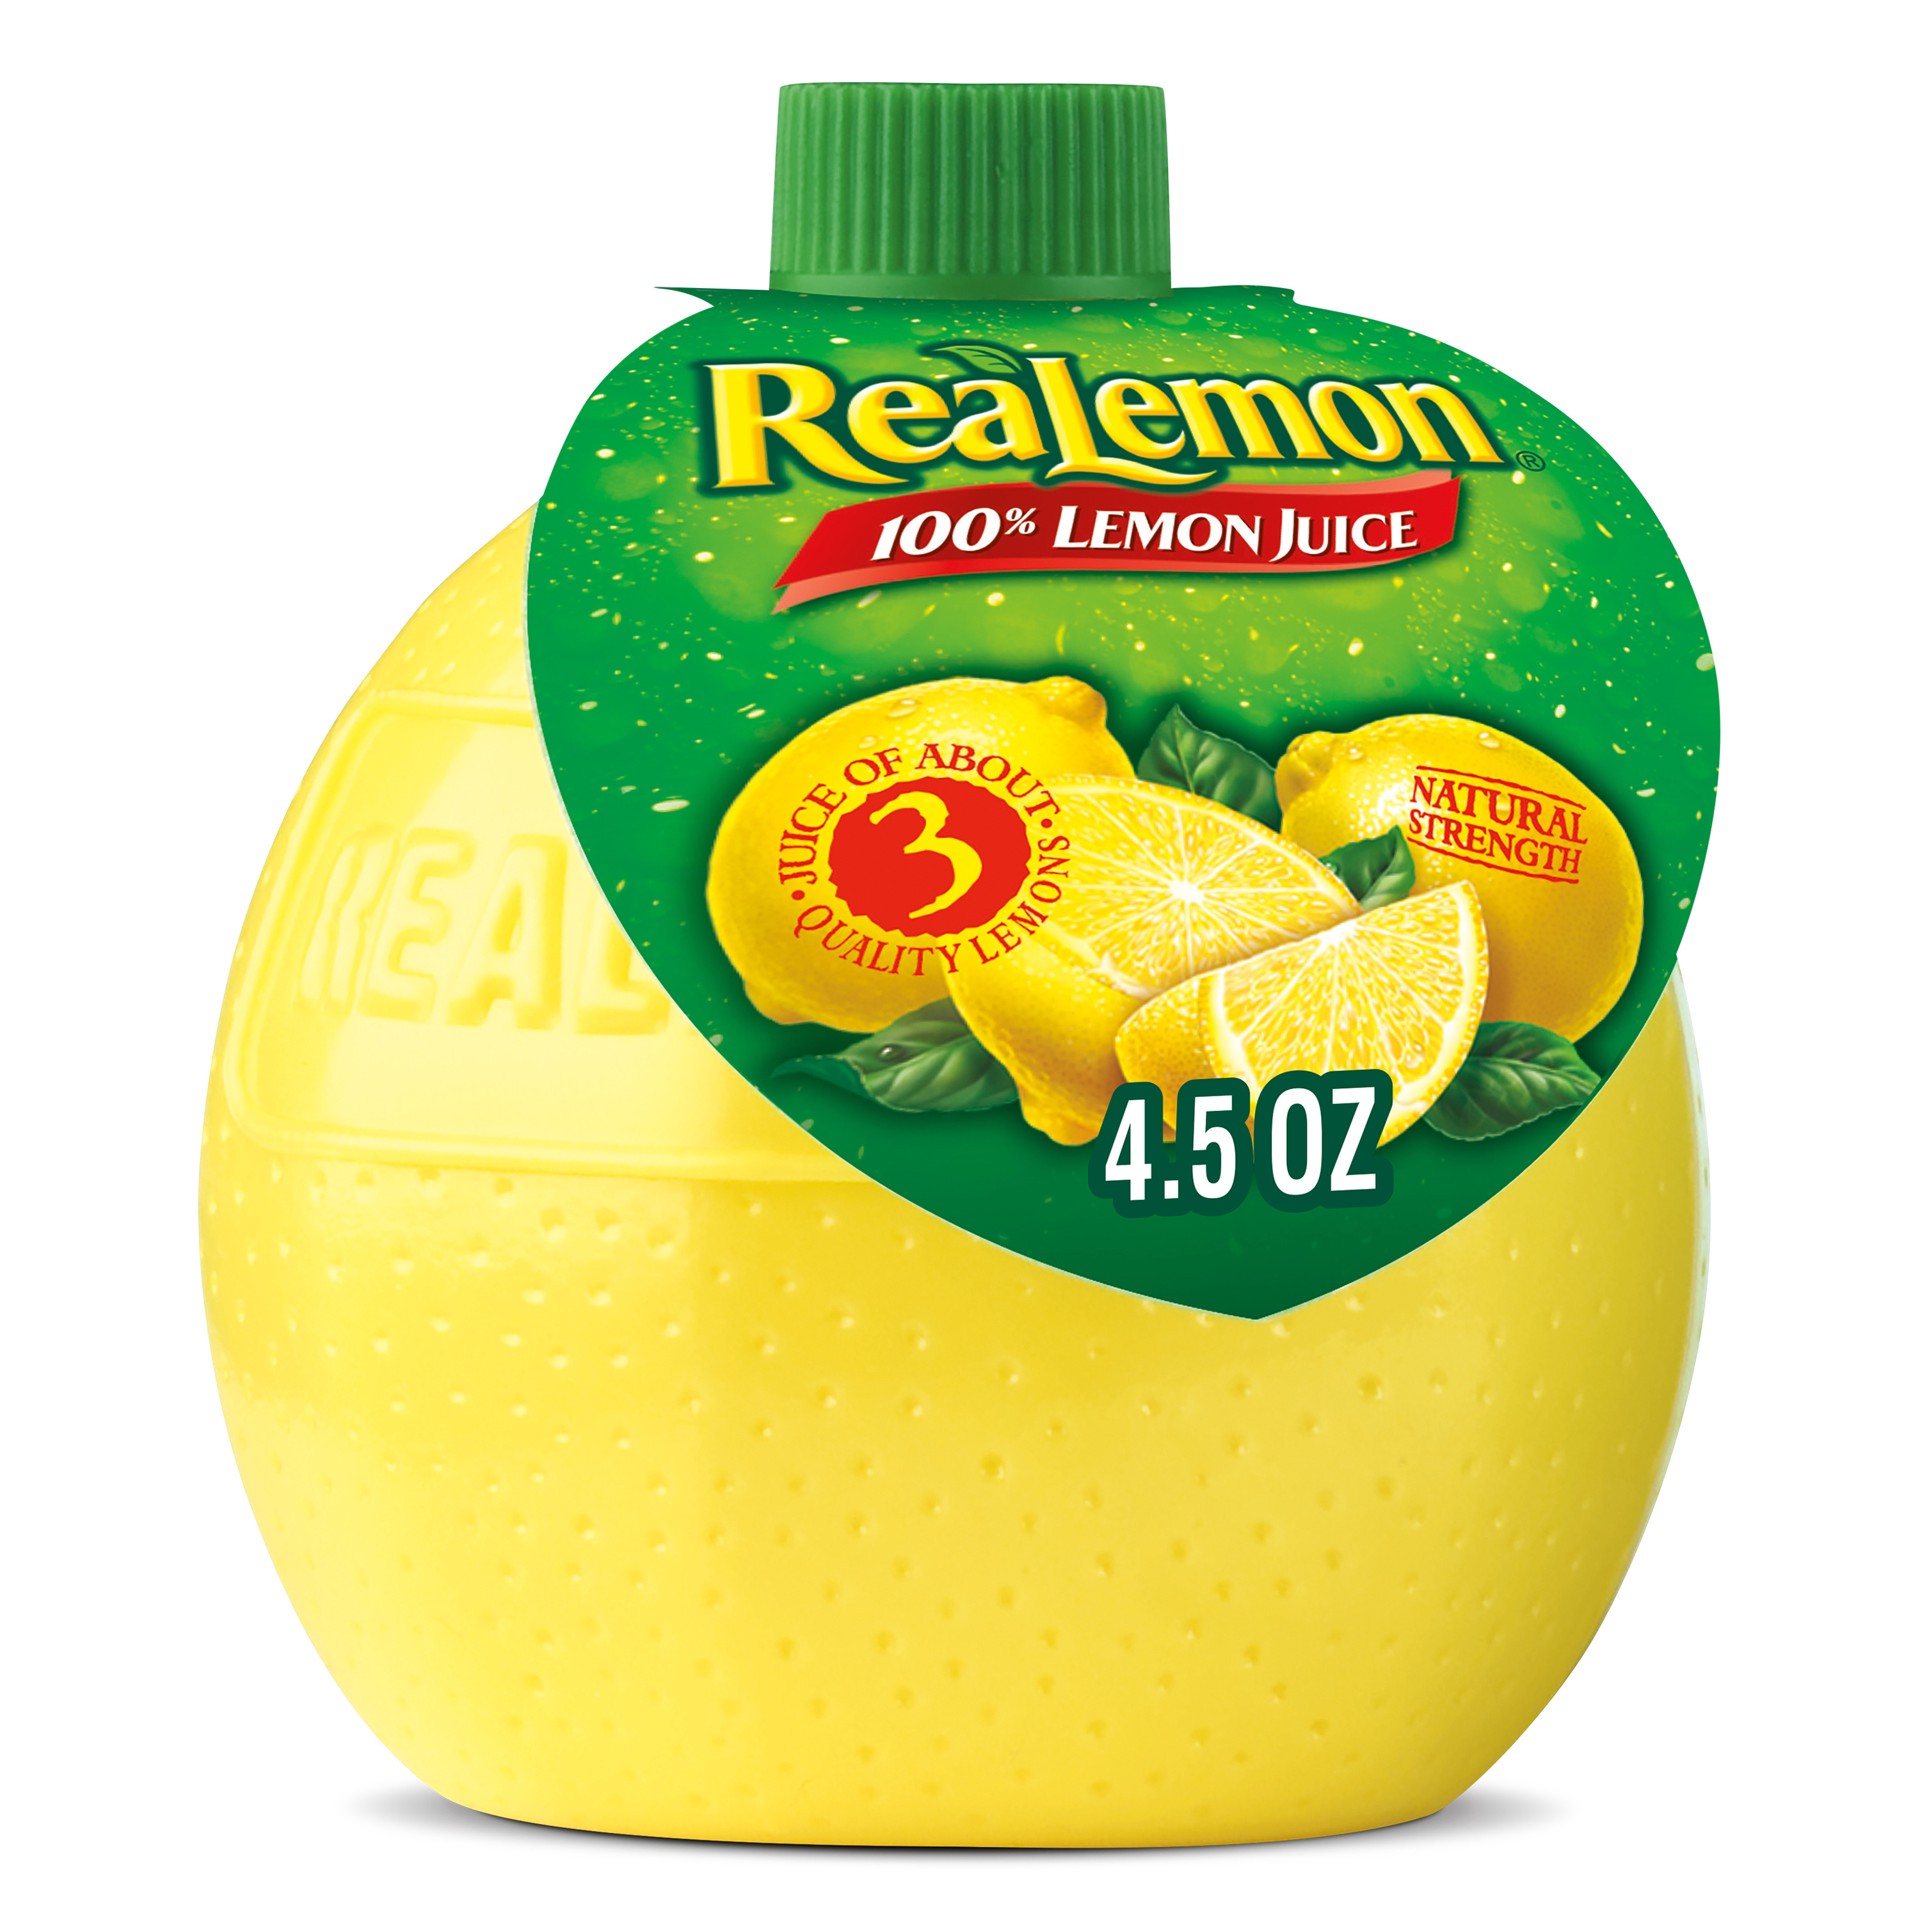 slide 1 of 2, ReaLemon 100% Lemon Juice, 4.5 fl oz bottle, 4.5 oz